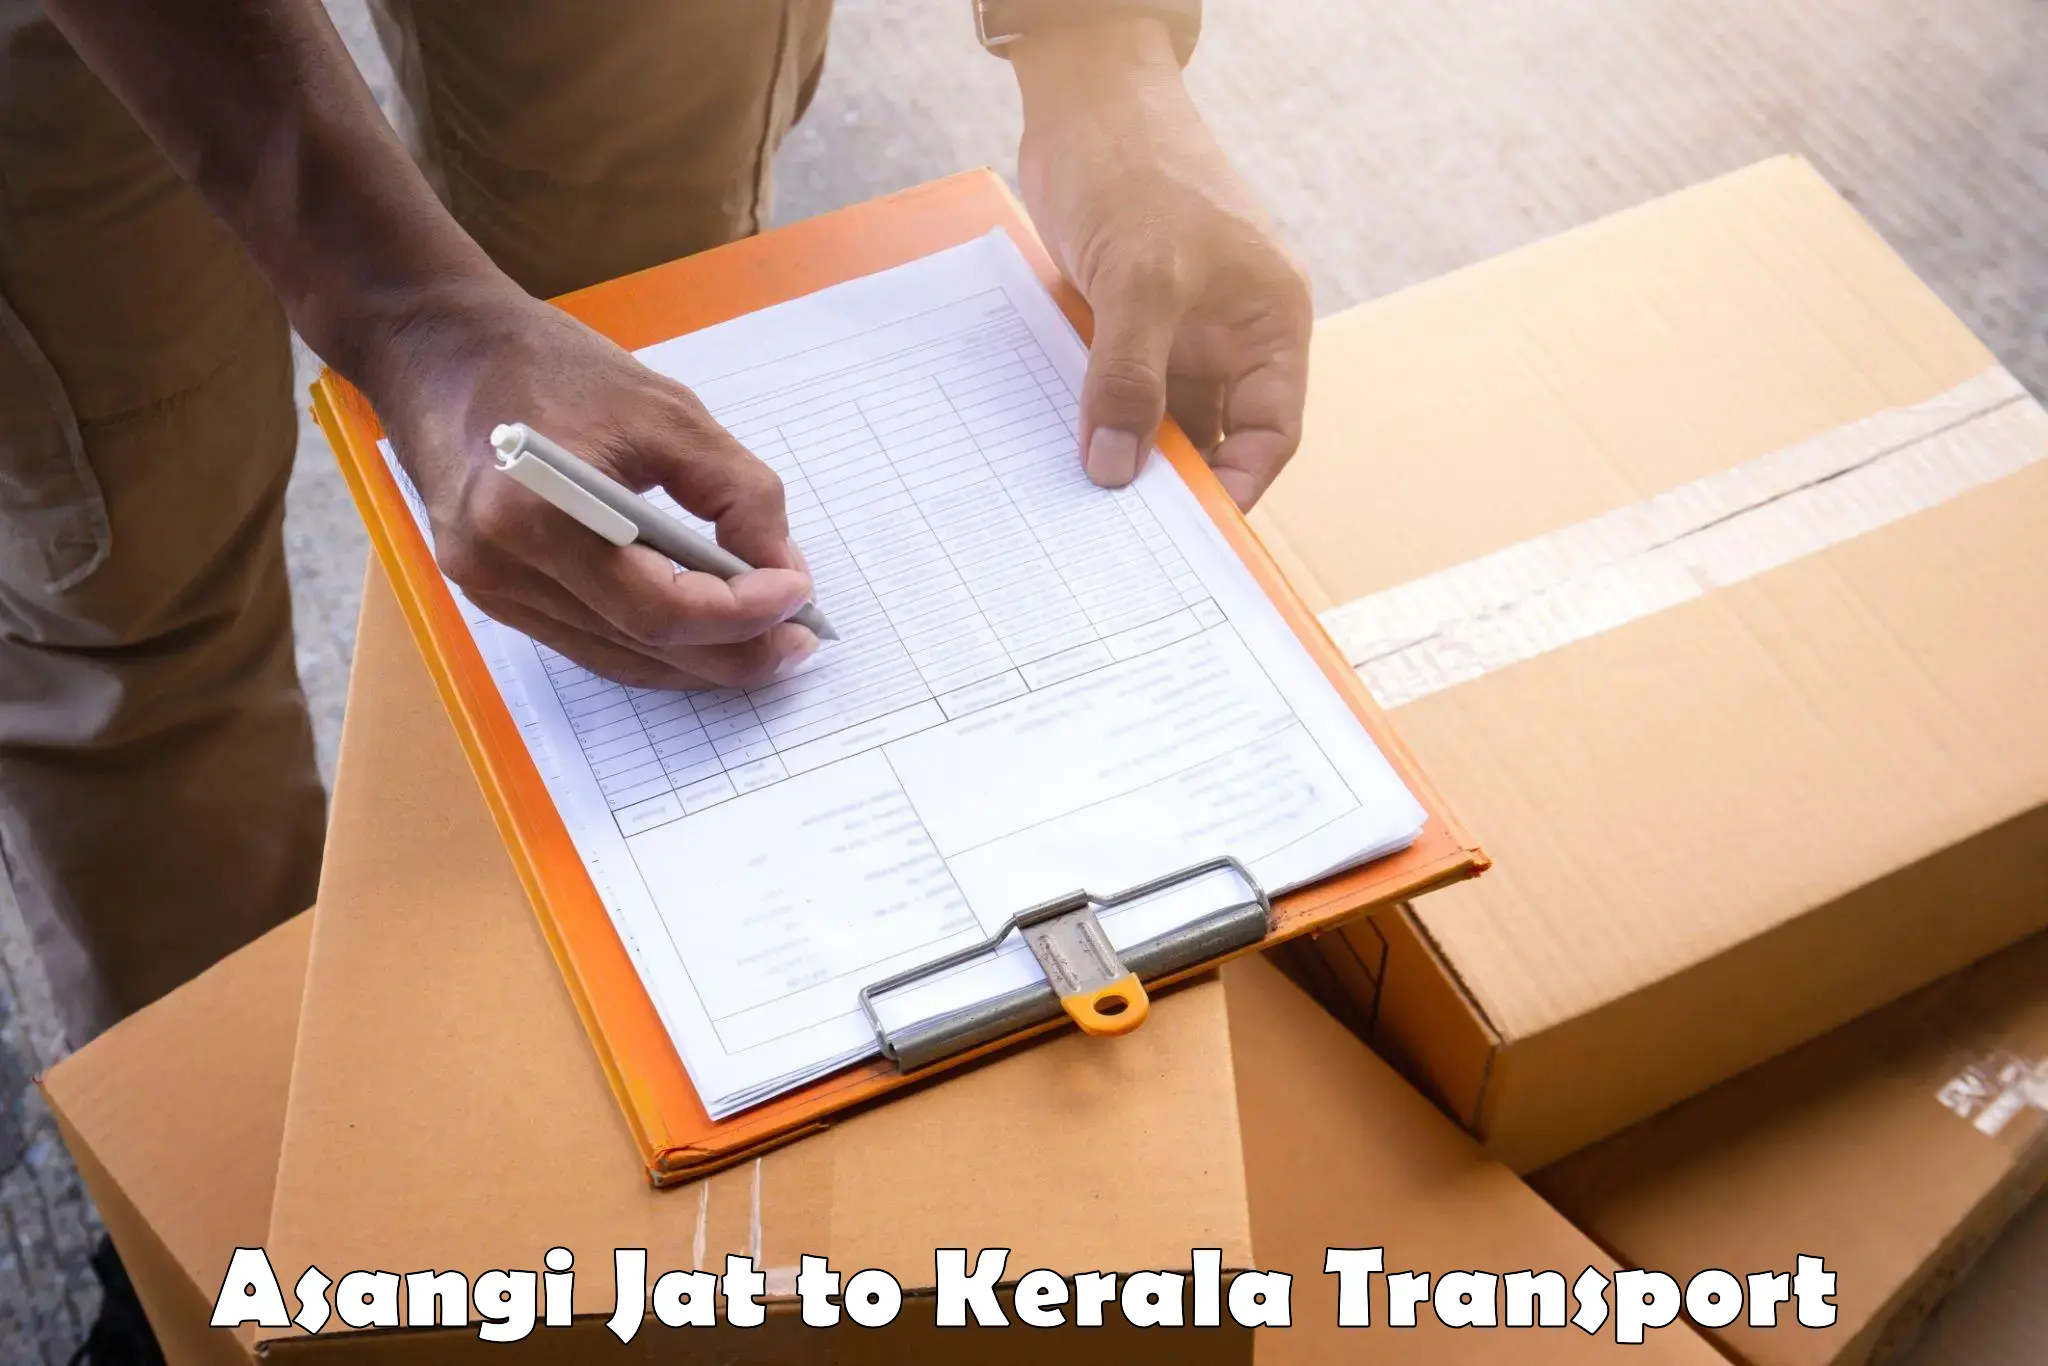 Domestic transport services Asangi Jat to Kerala